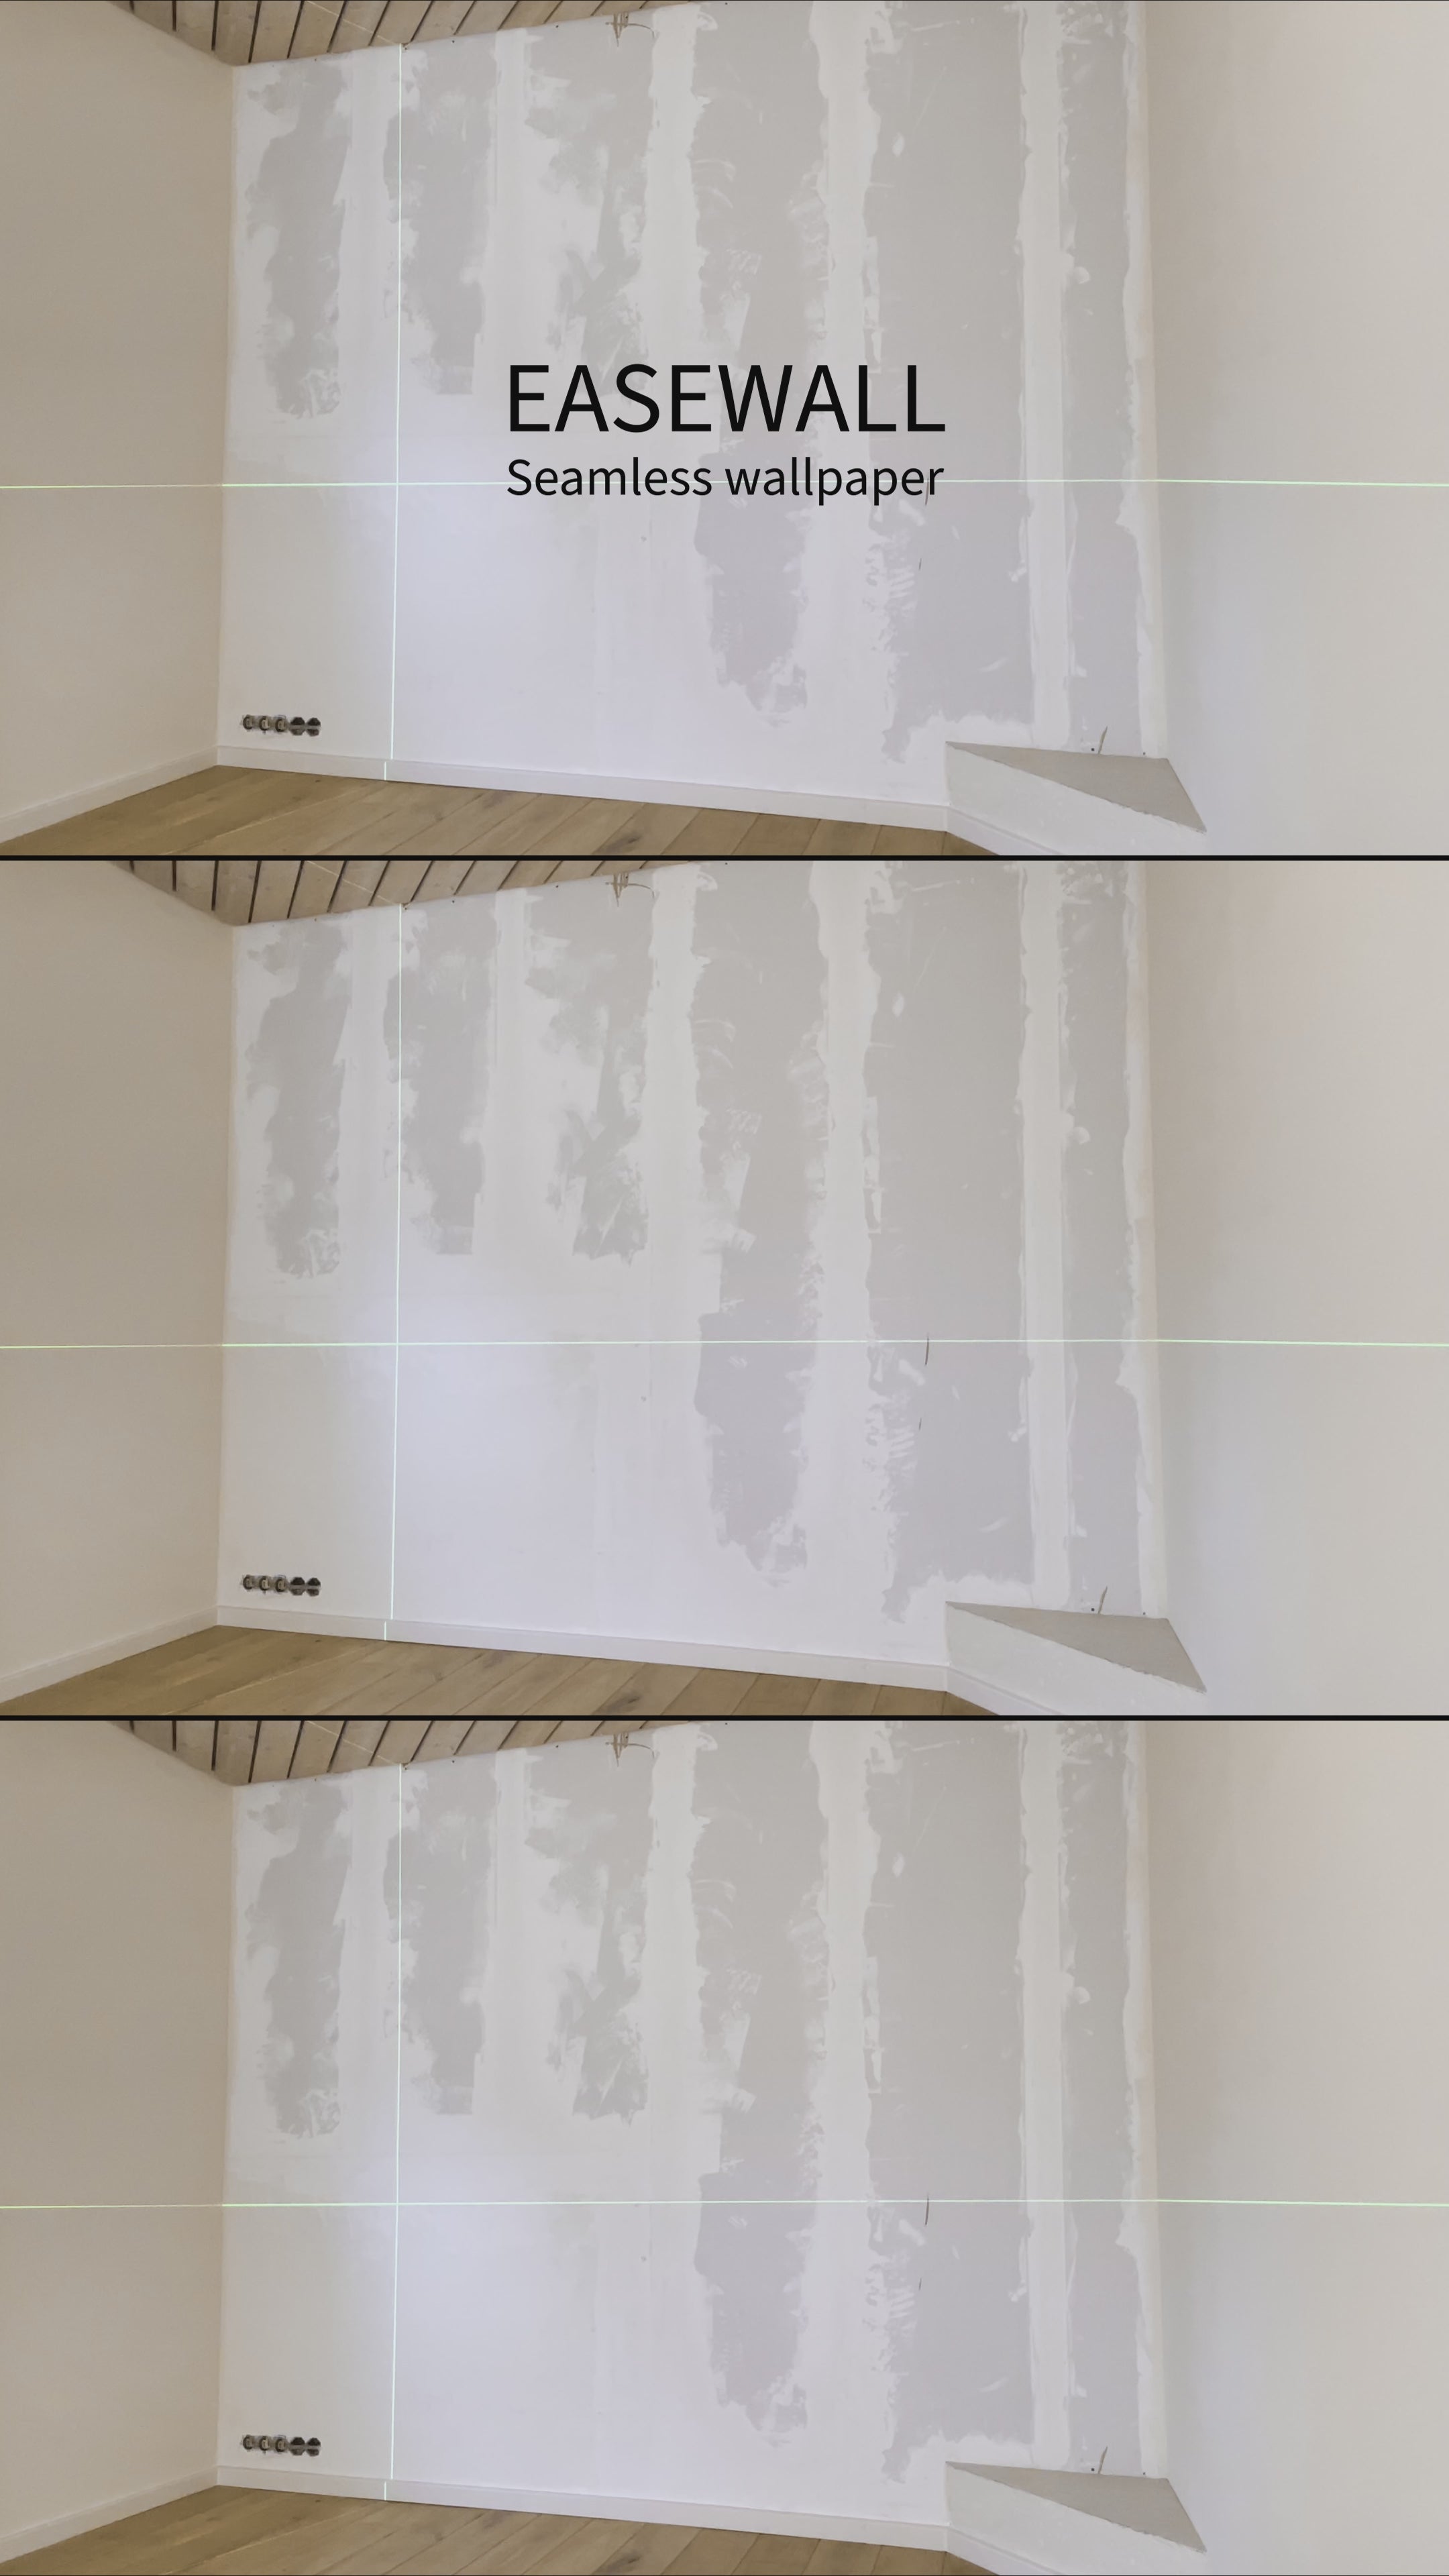 Video laden: Seamless wallpaper installation video